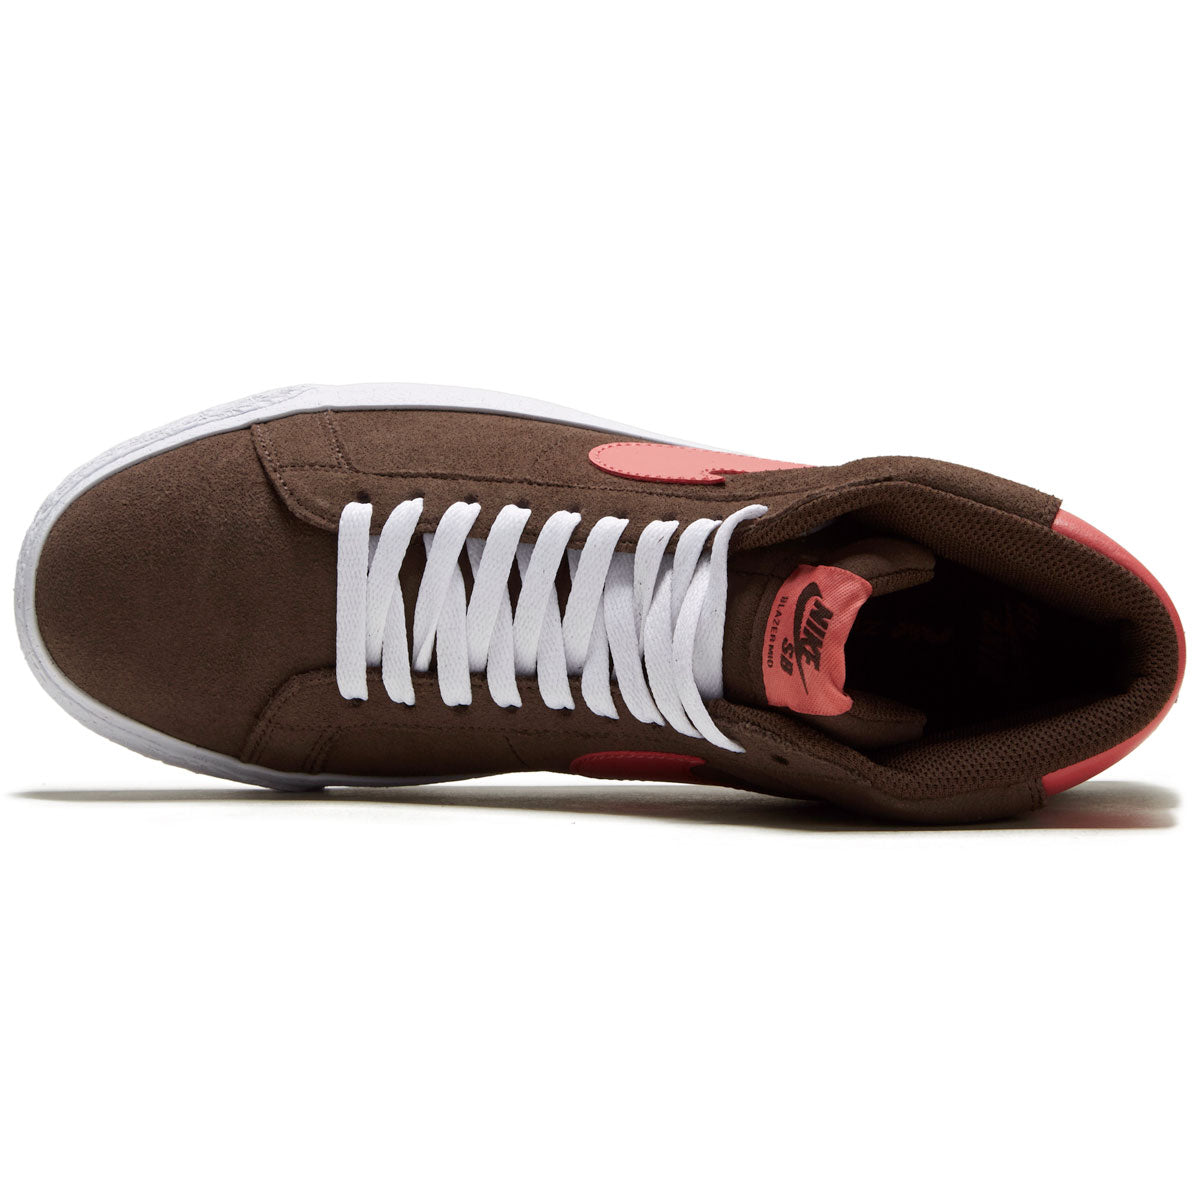 Nike SB Zoom Blazer Mid Shoes - Baroque Brown/Adobe/Baroque Brown/White image 3